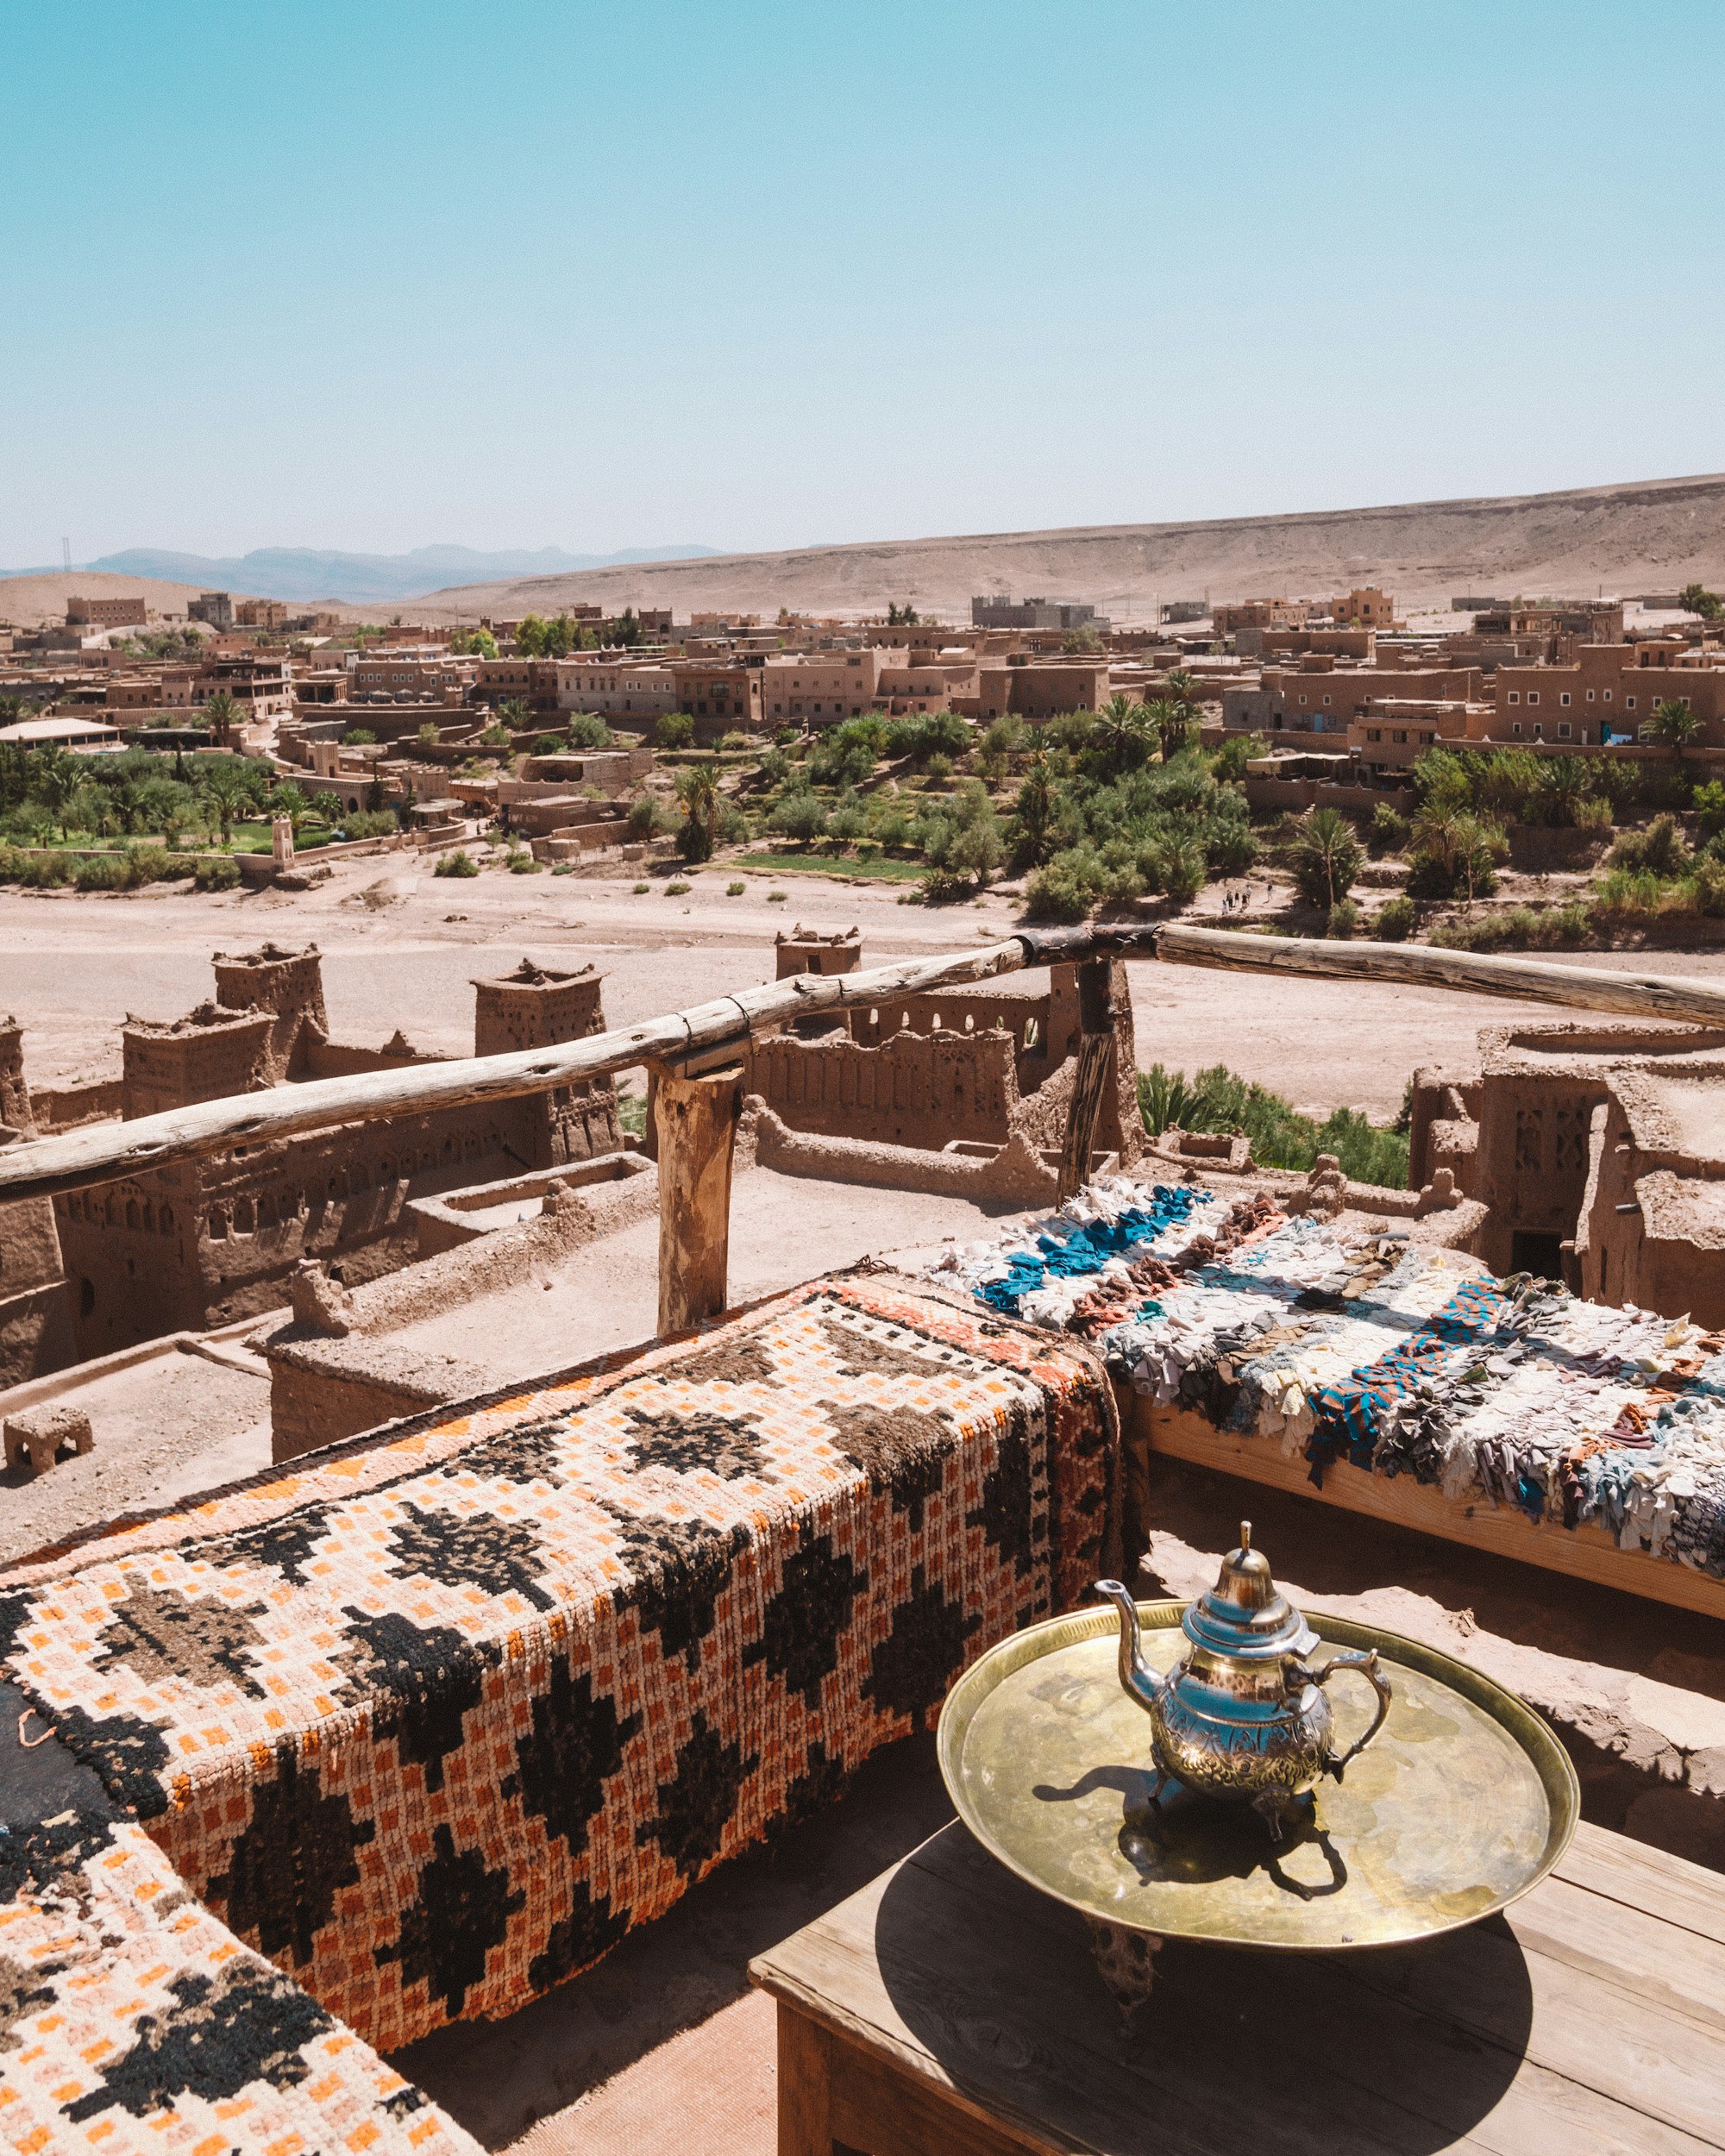 Ait benhaddou in Morocco